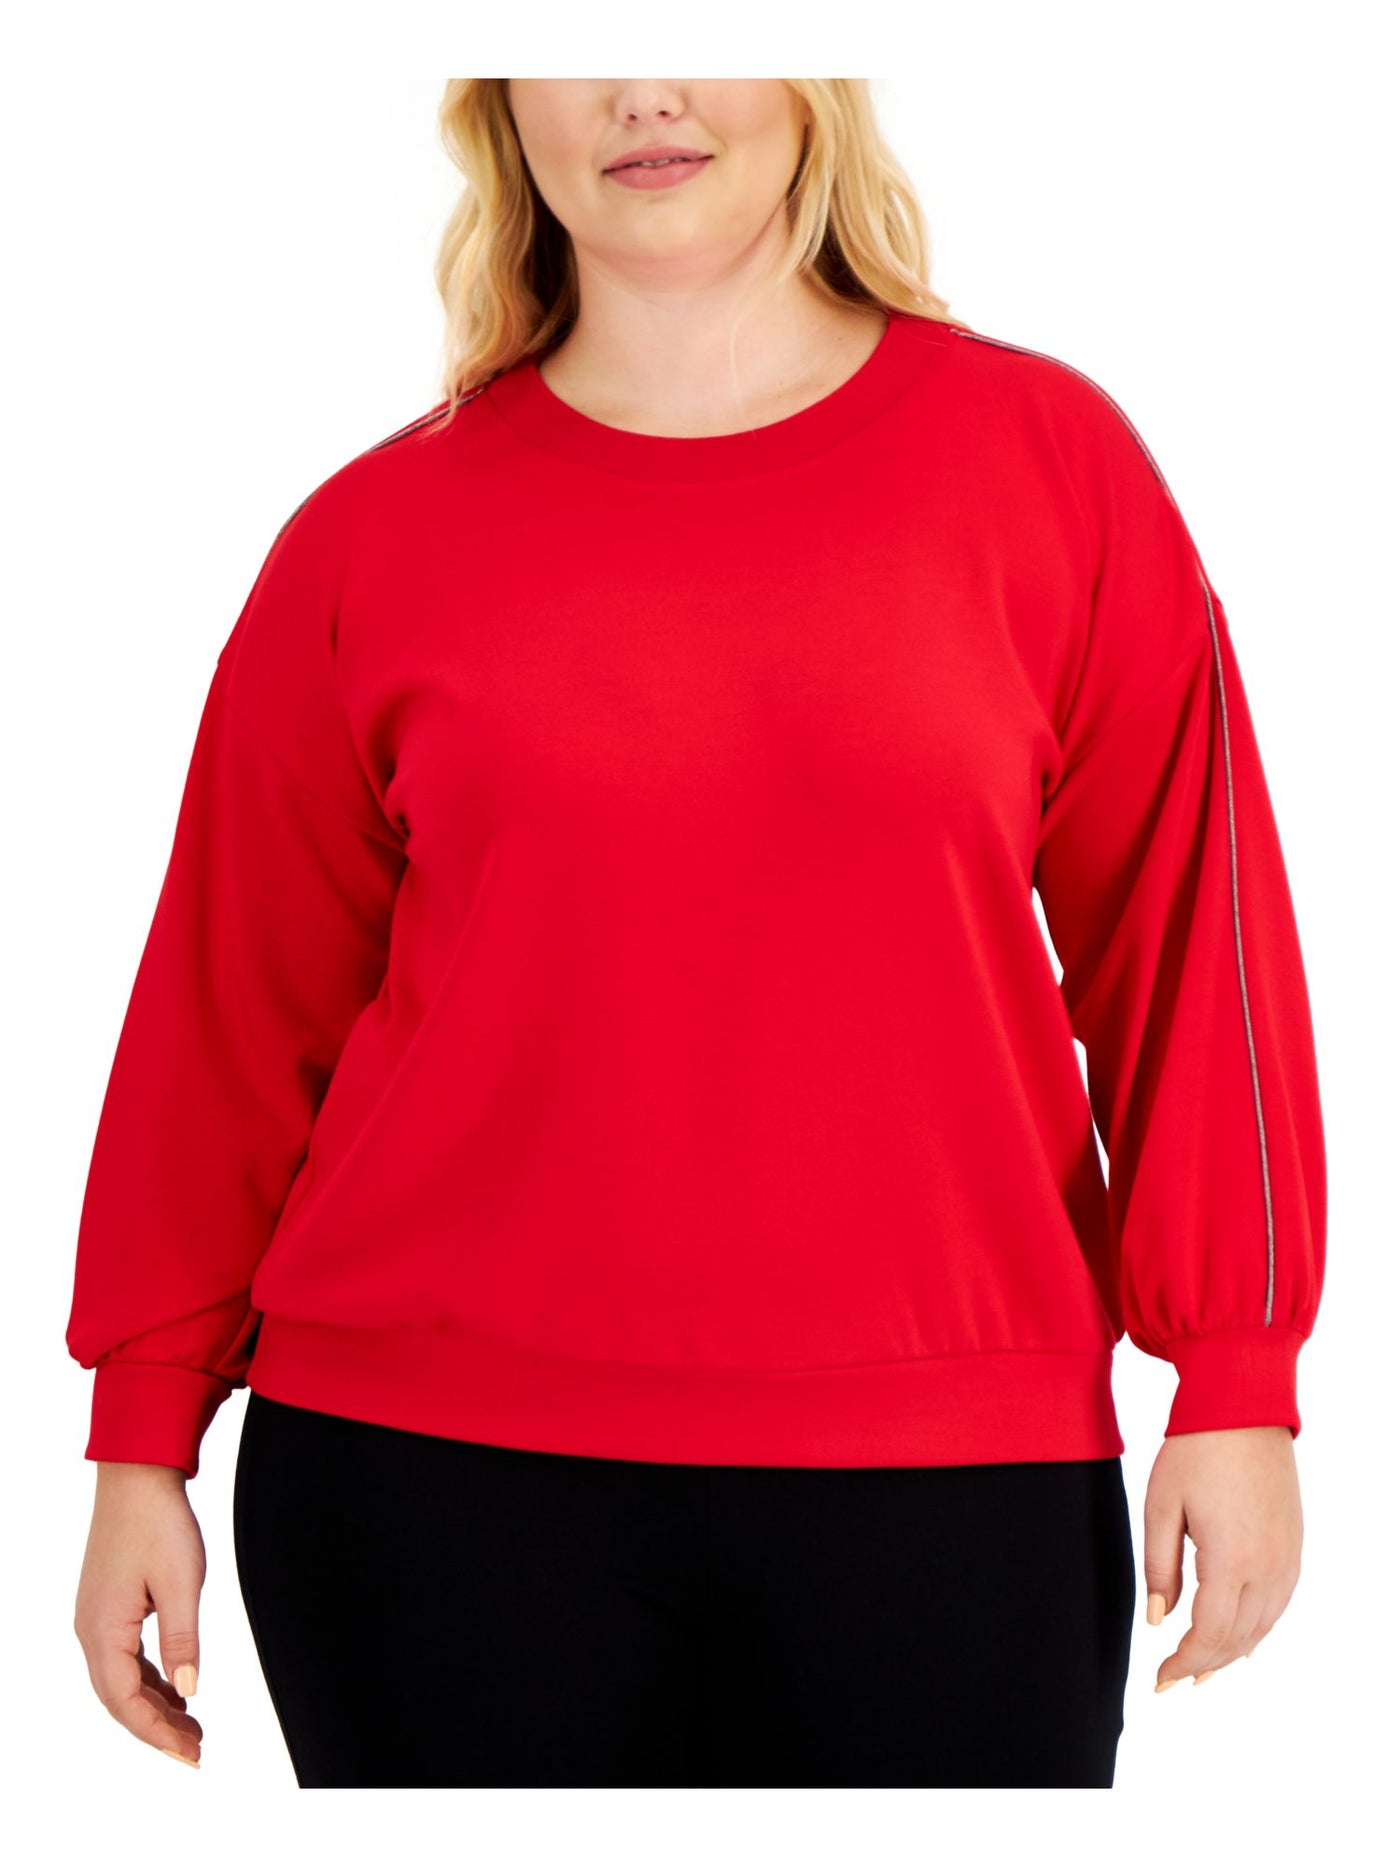 ALFANI Womens Red Metallic Sweatshirt Petites PP